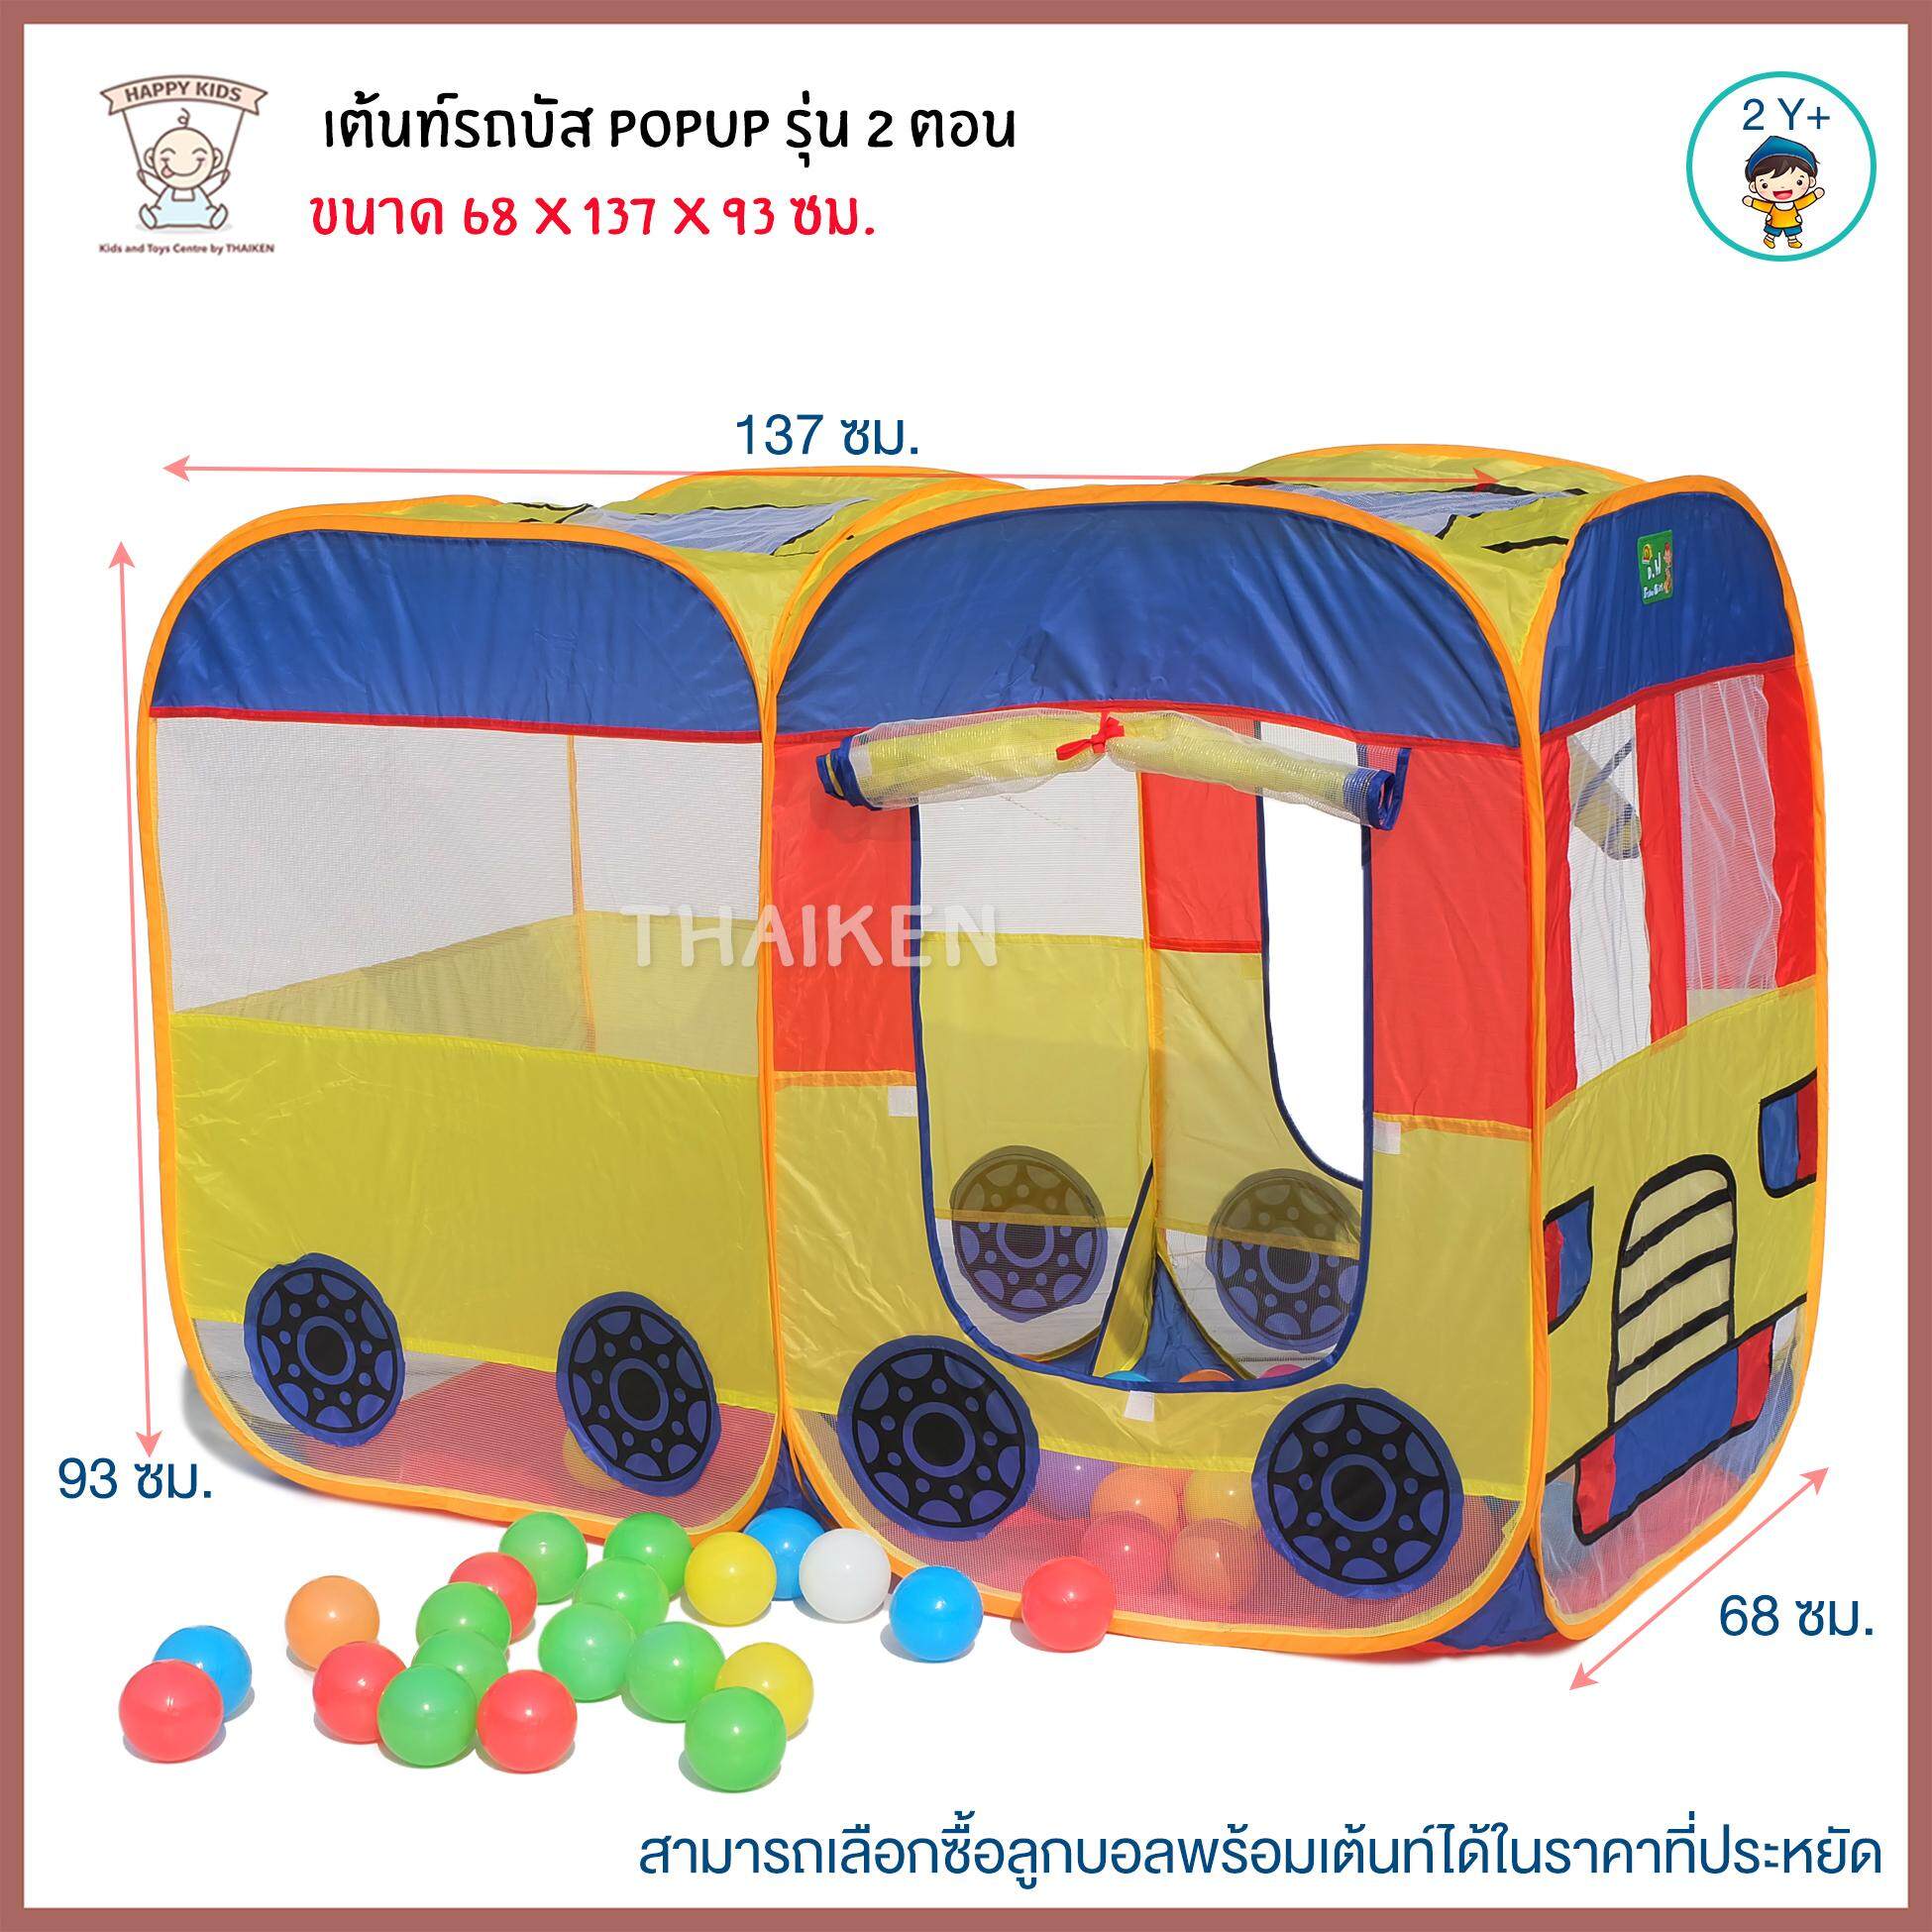 Thaiken เต้นท์รถบัส POPUP รุ่น 2 ตอน (137 x 93 x 68cm) Baby Pop Up Tent House Bus 3303